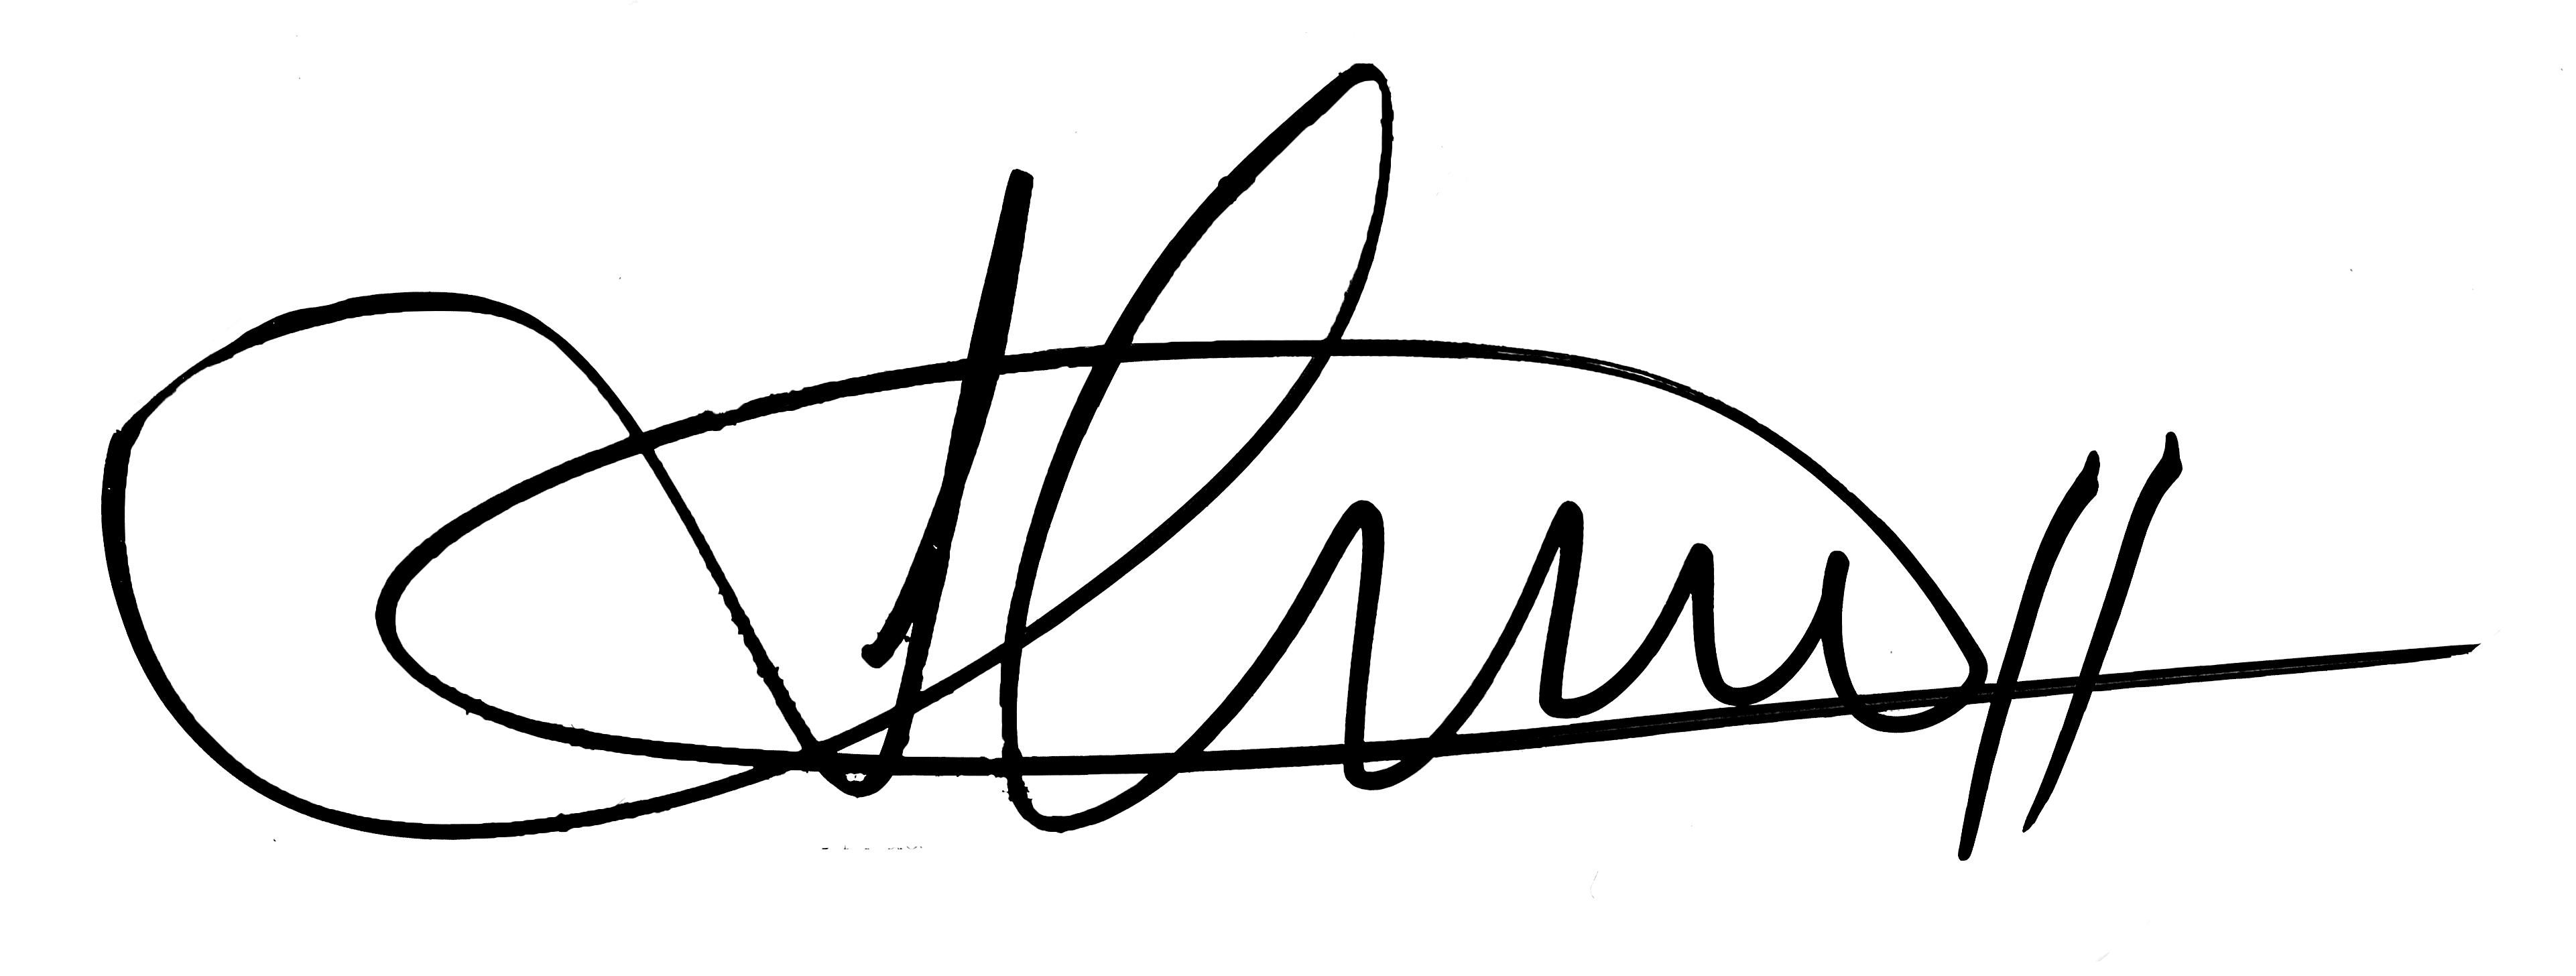 signatures - Clip Art Library